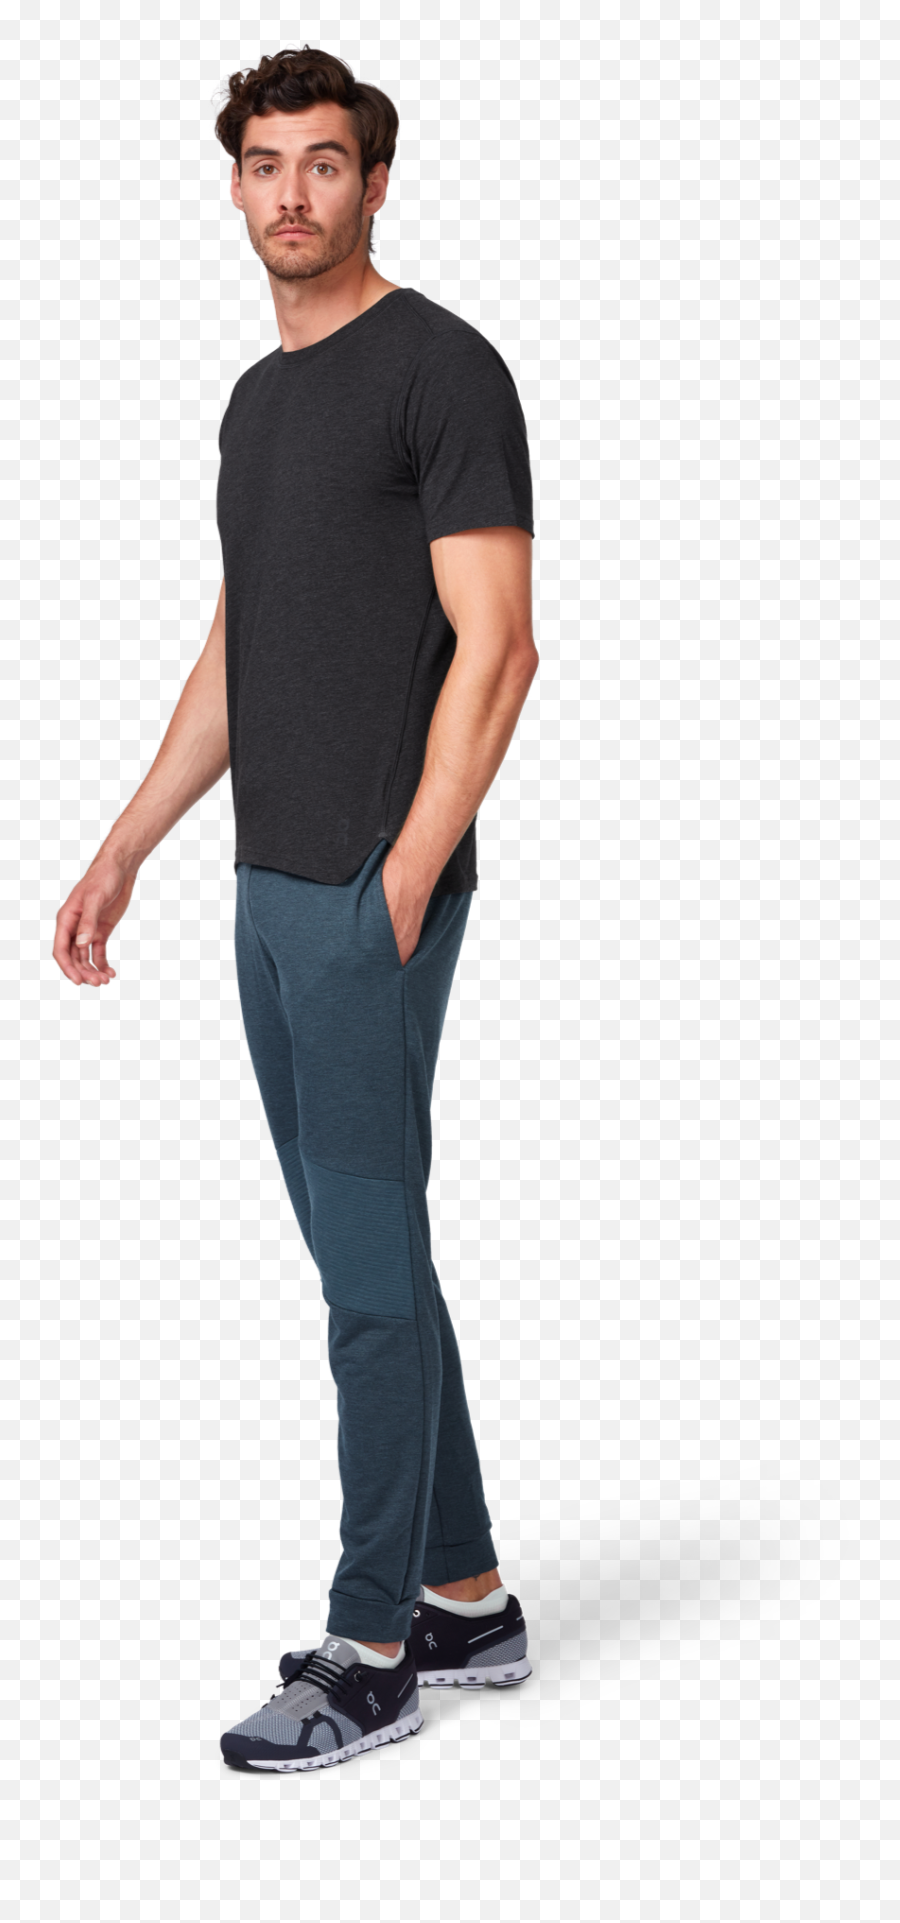 Comfort - T Standing Emoji,Black Shirt Png